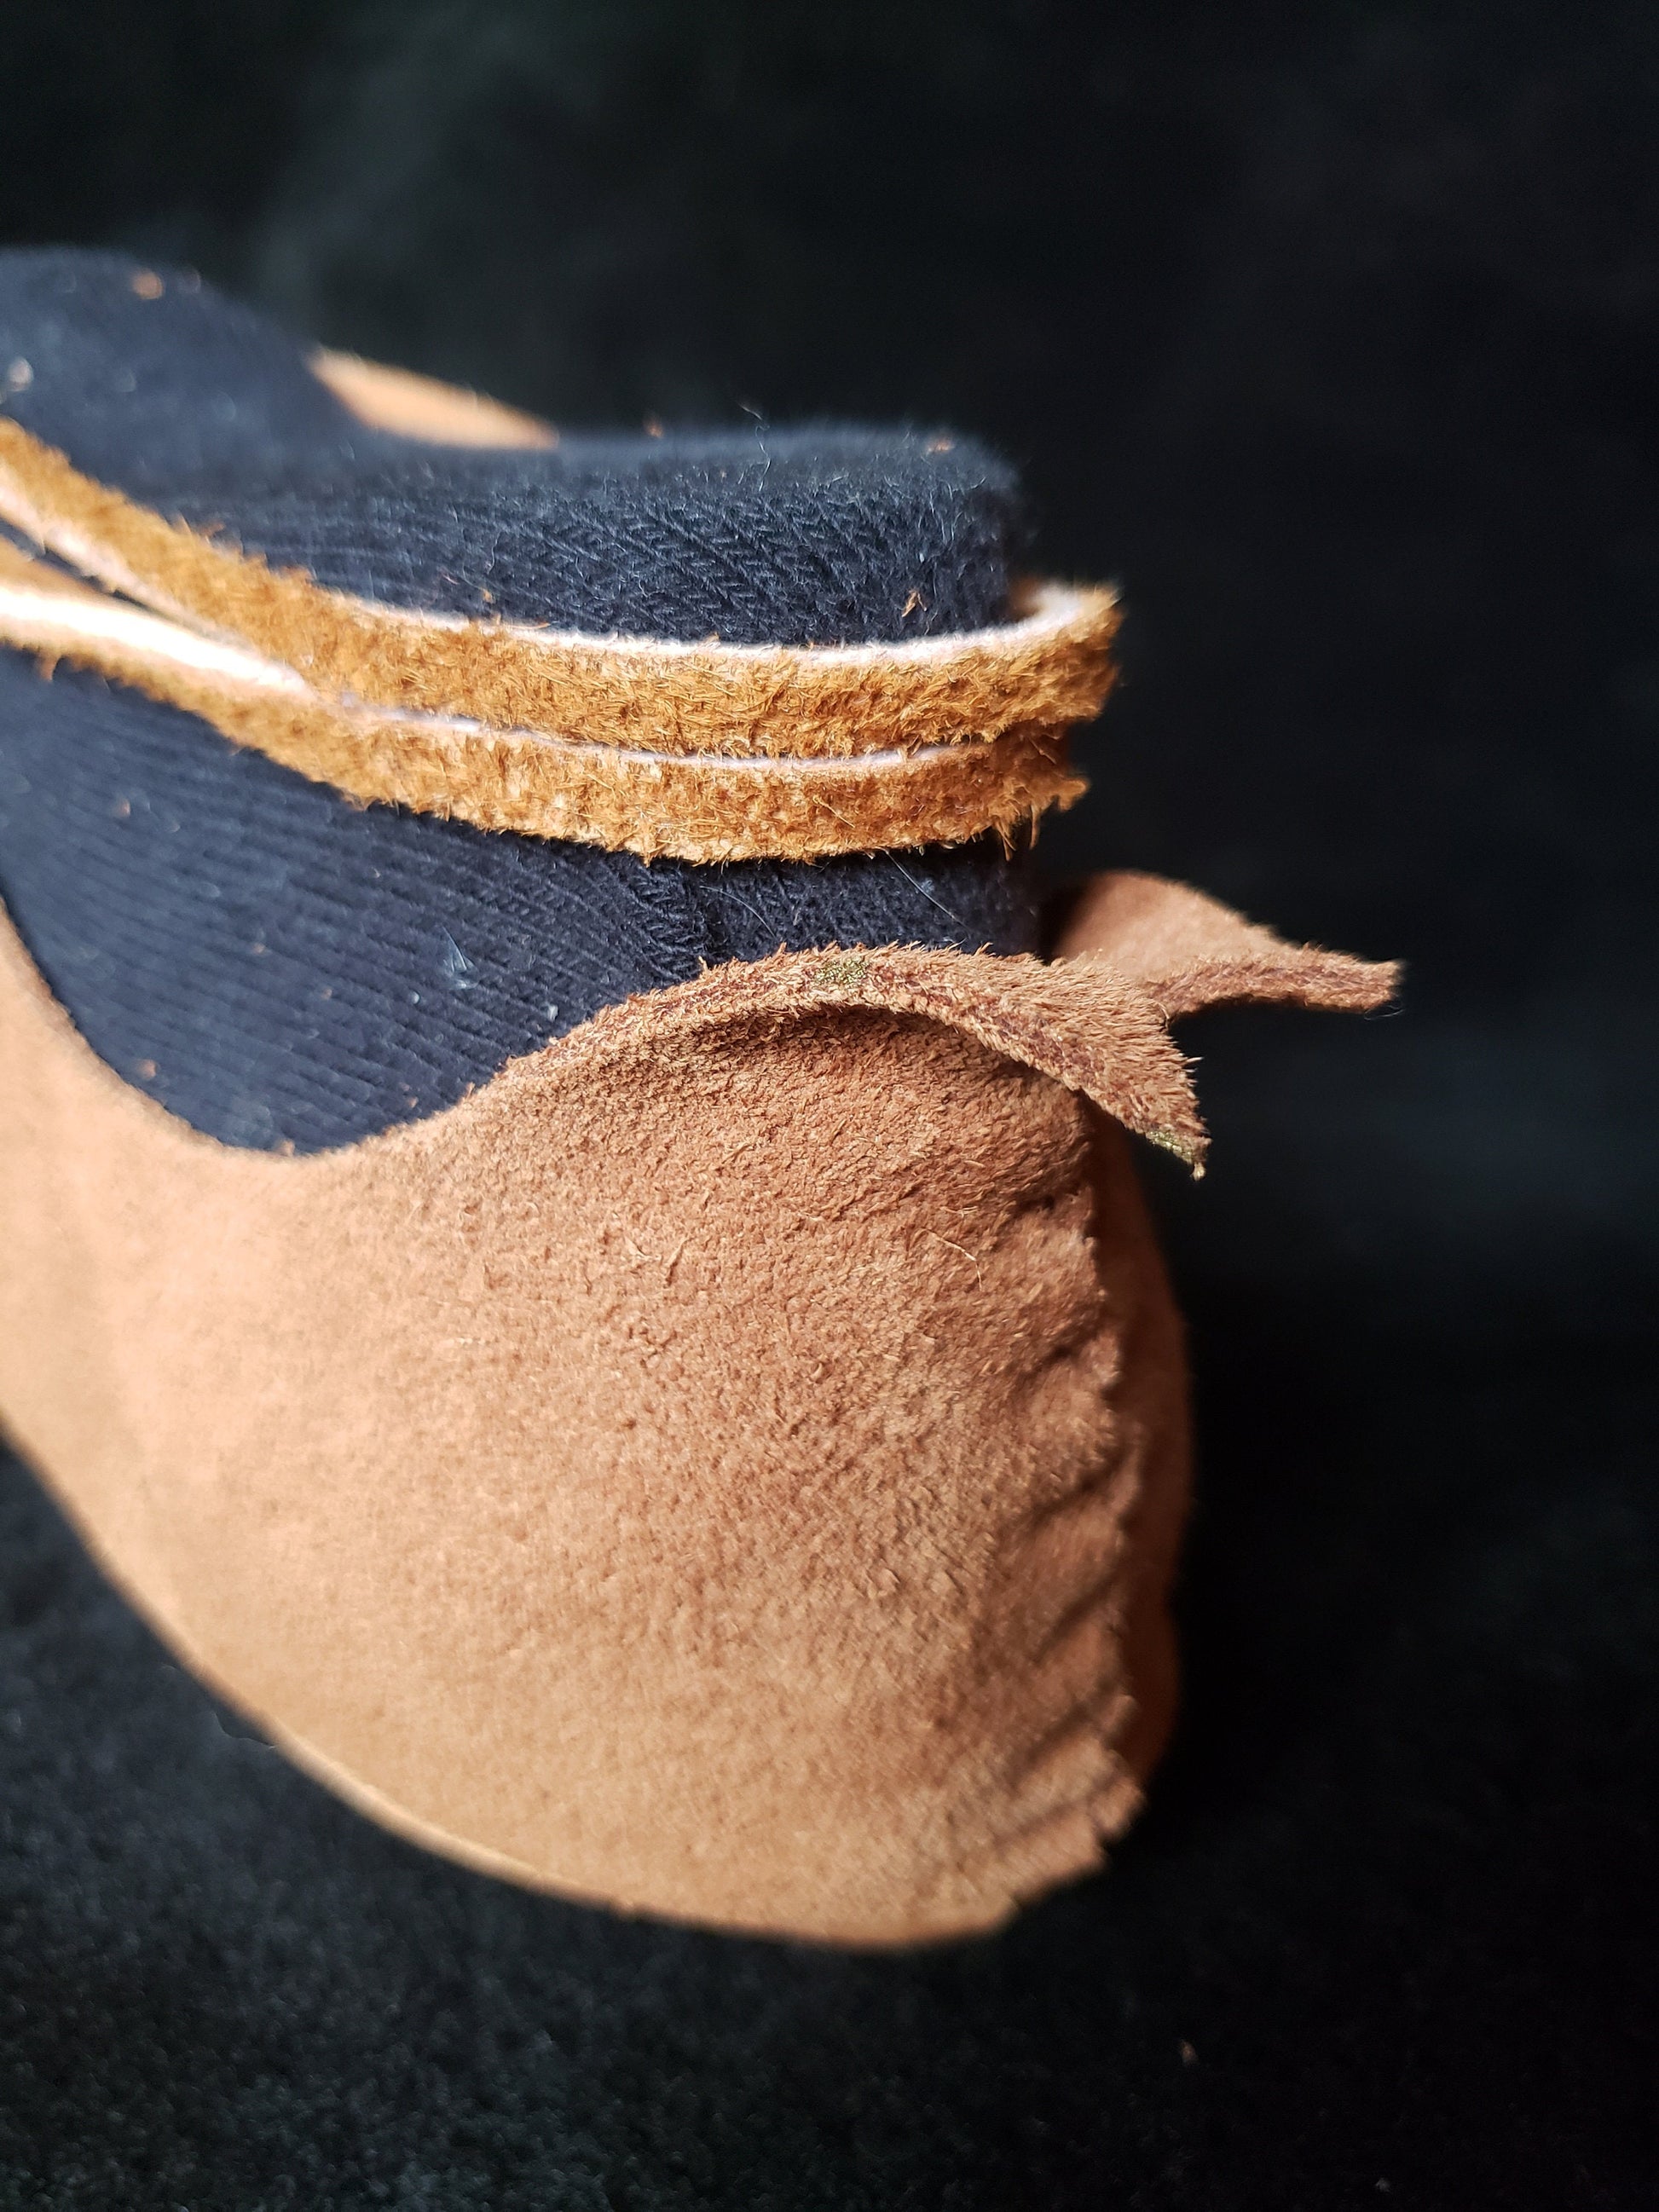 "Sun" Sandals / Custom-Made Barefoot-Sandals Earthingmoccasins